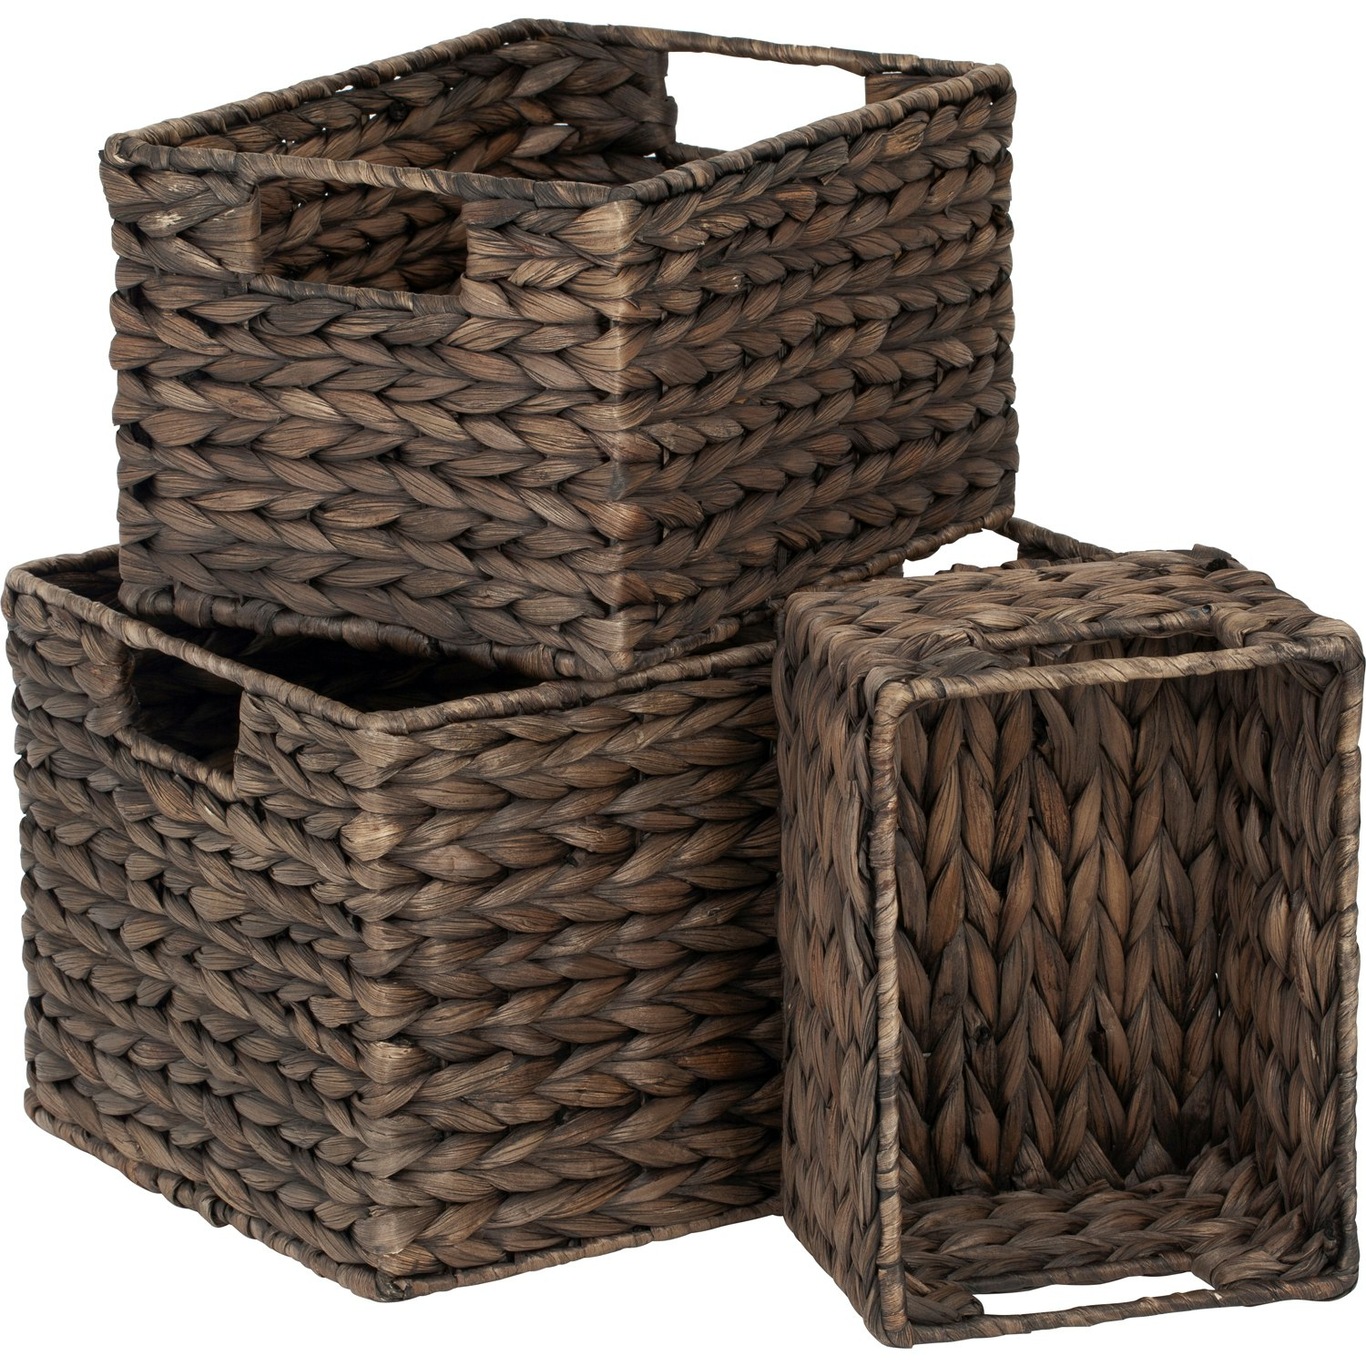 Water Hyacinth Baskets Brown 3-pack, S